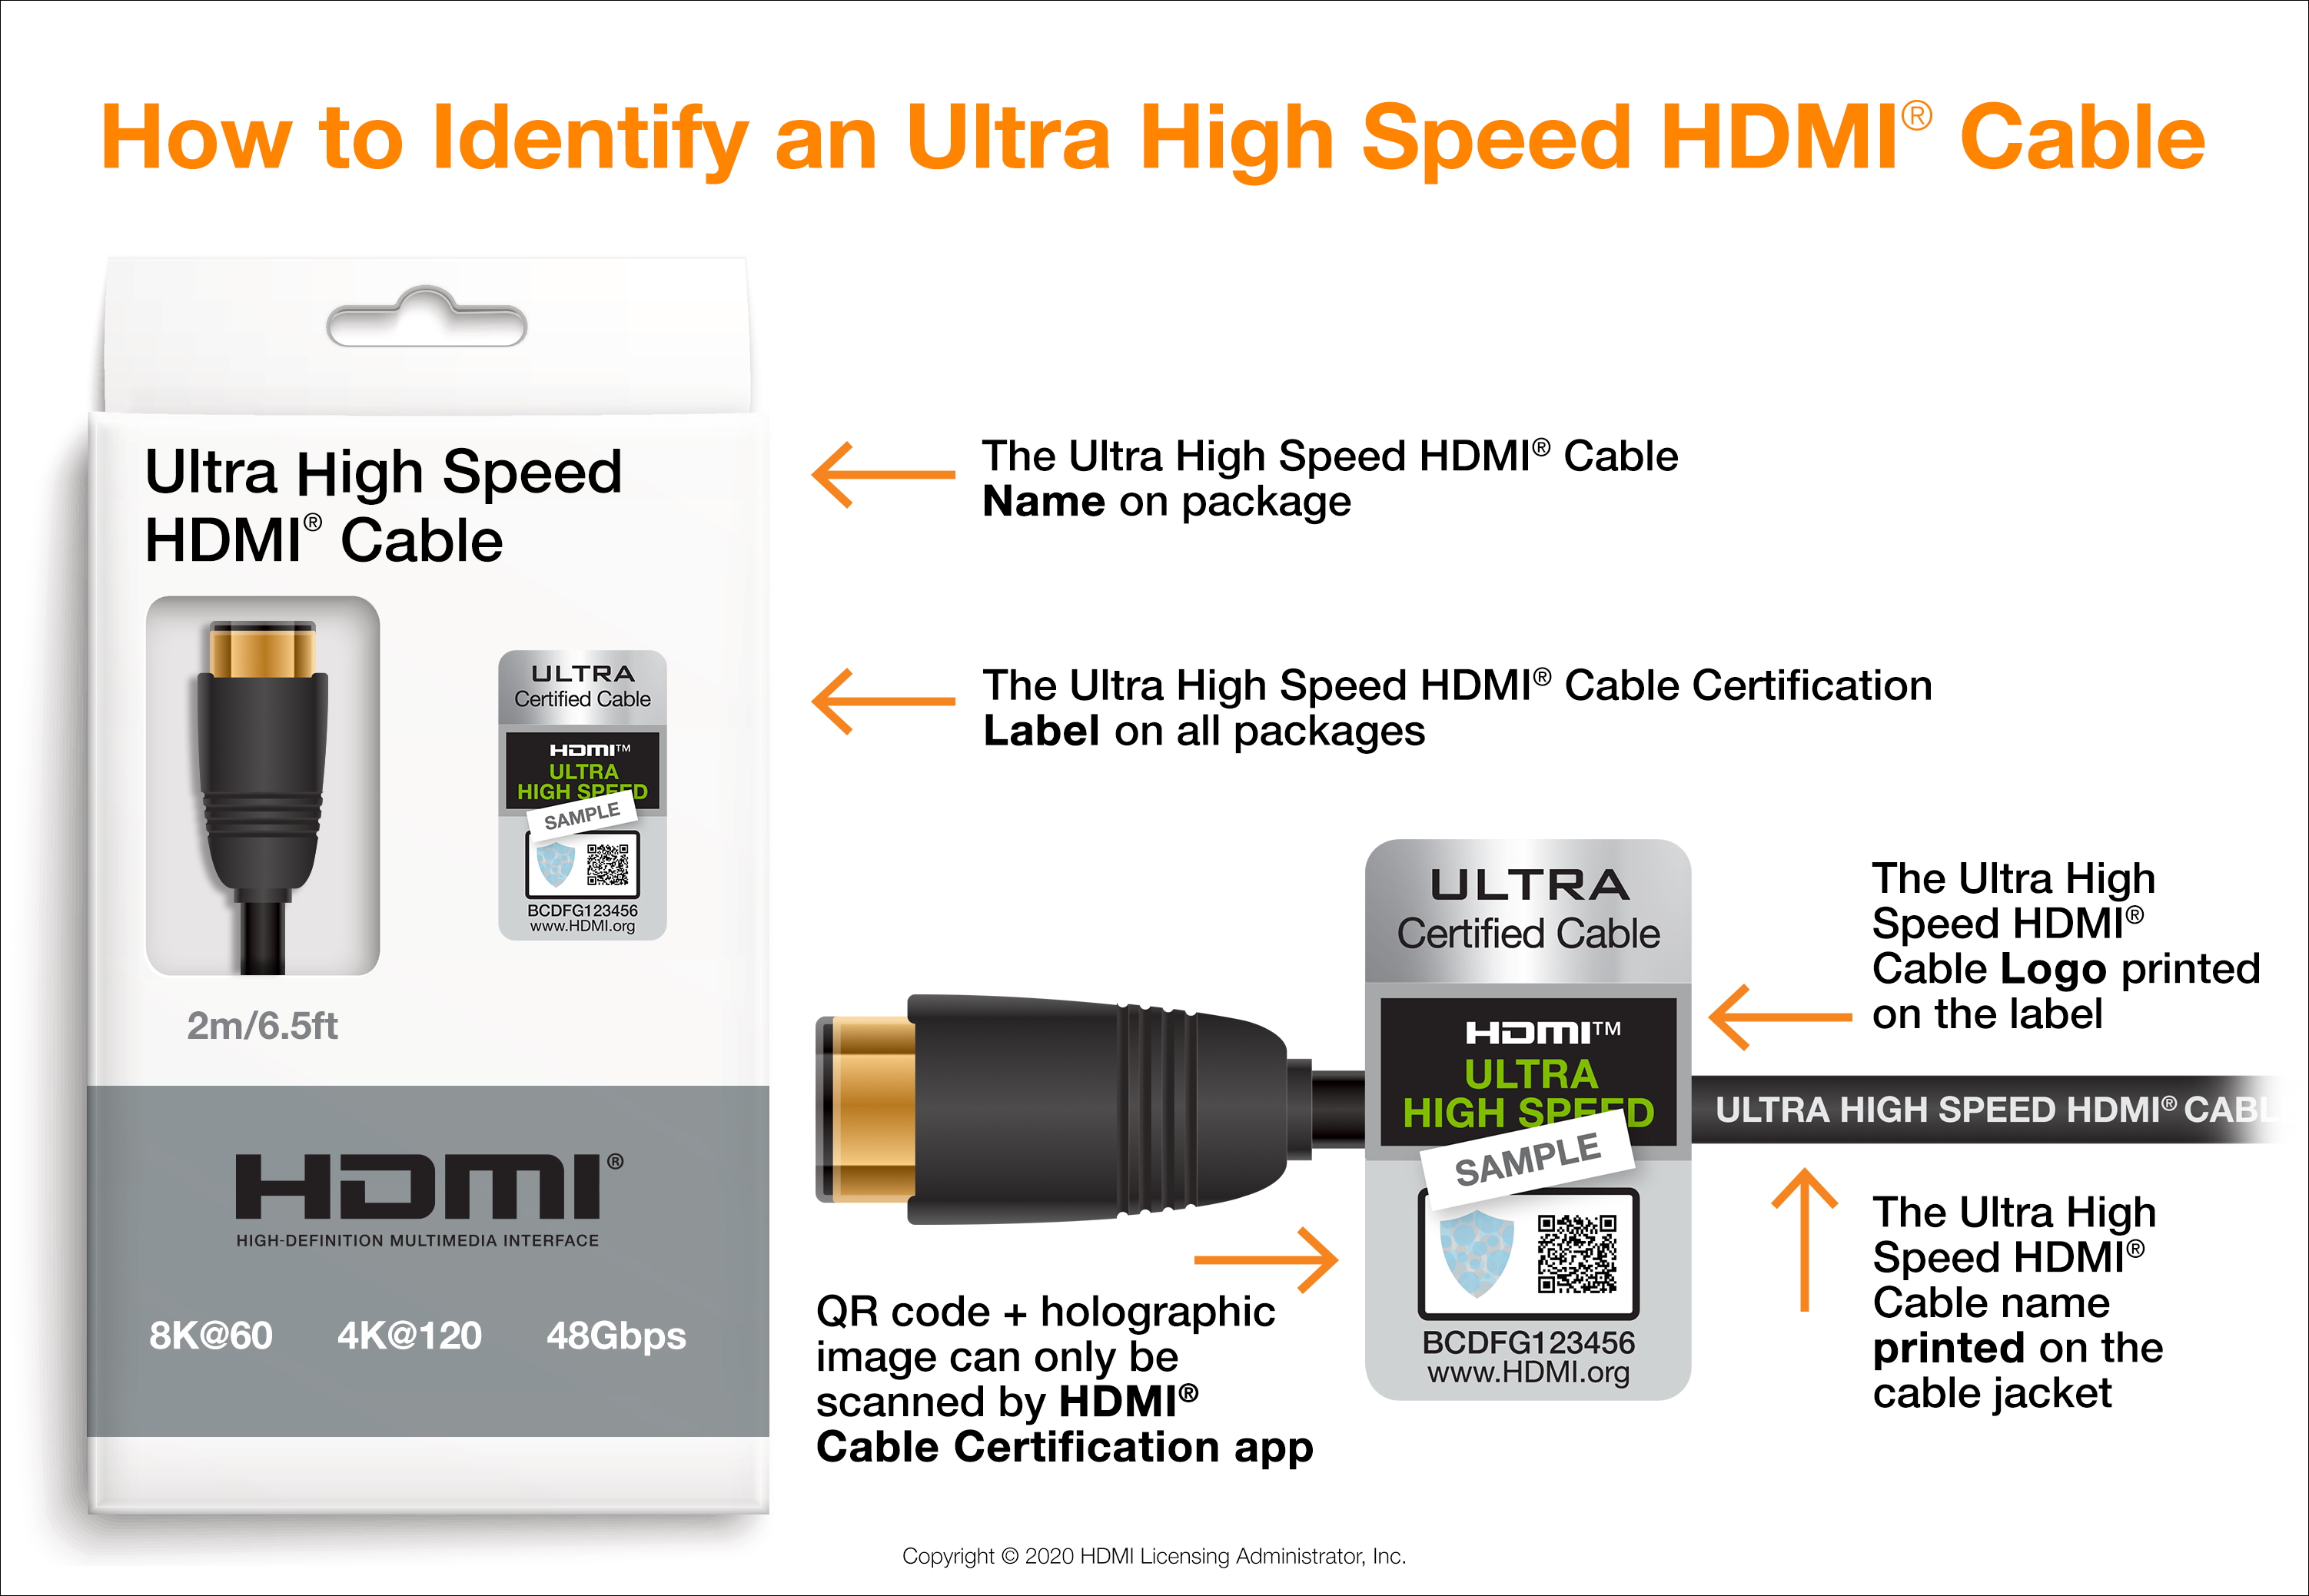 Câble HDMI-HDMI 5M - WIKI High Tech Provider